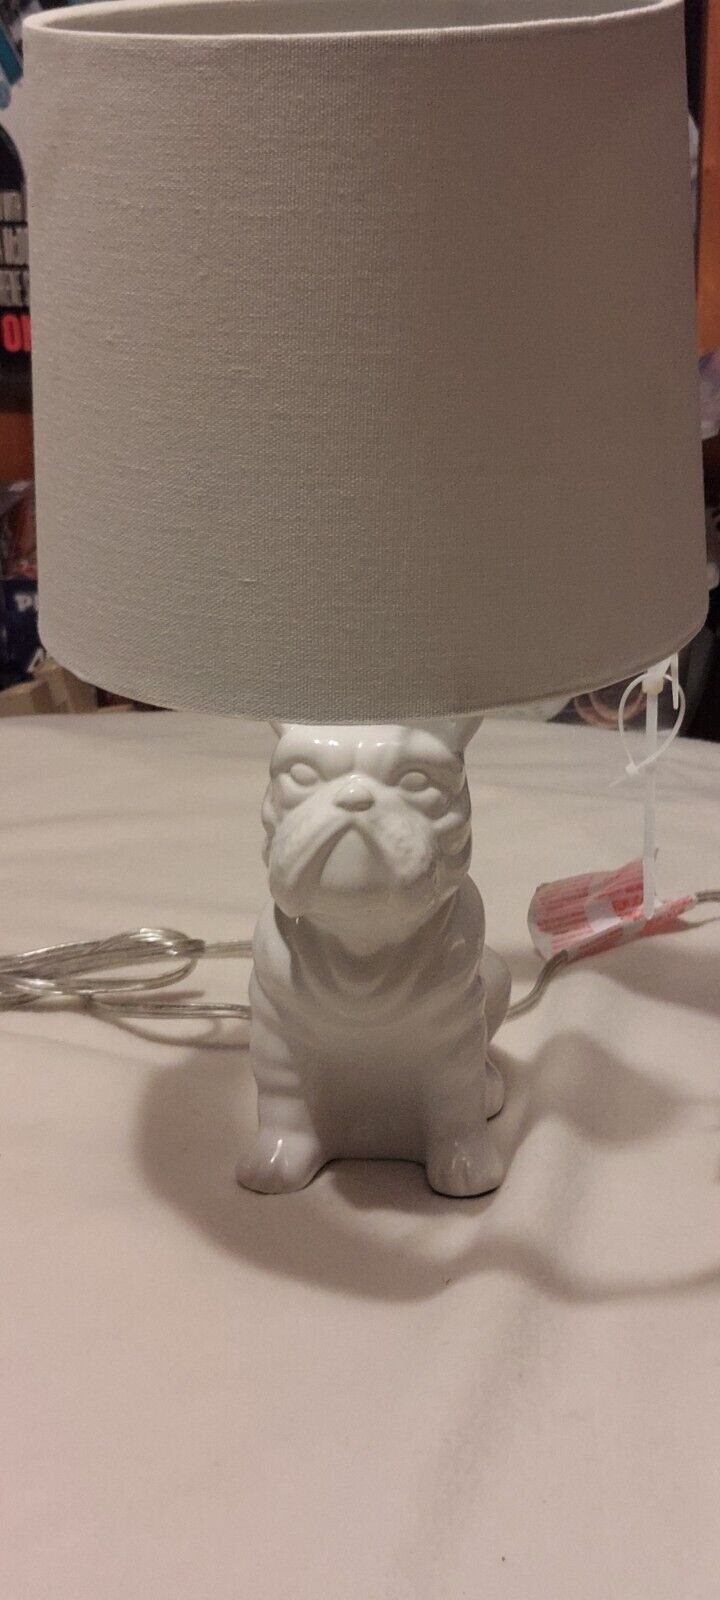 French Bulldog Lamp